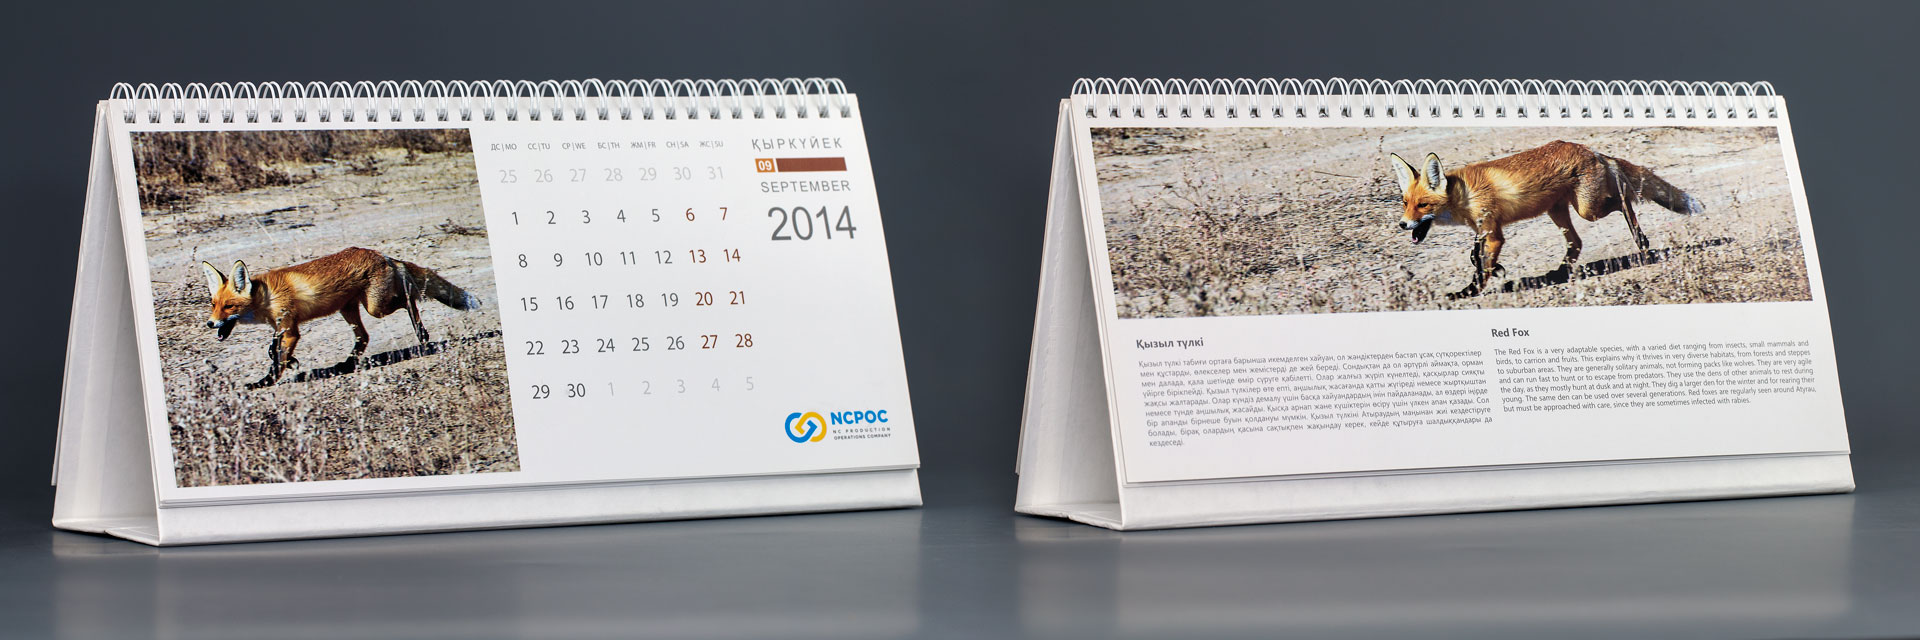 NCPOC - calendar 2014